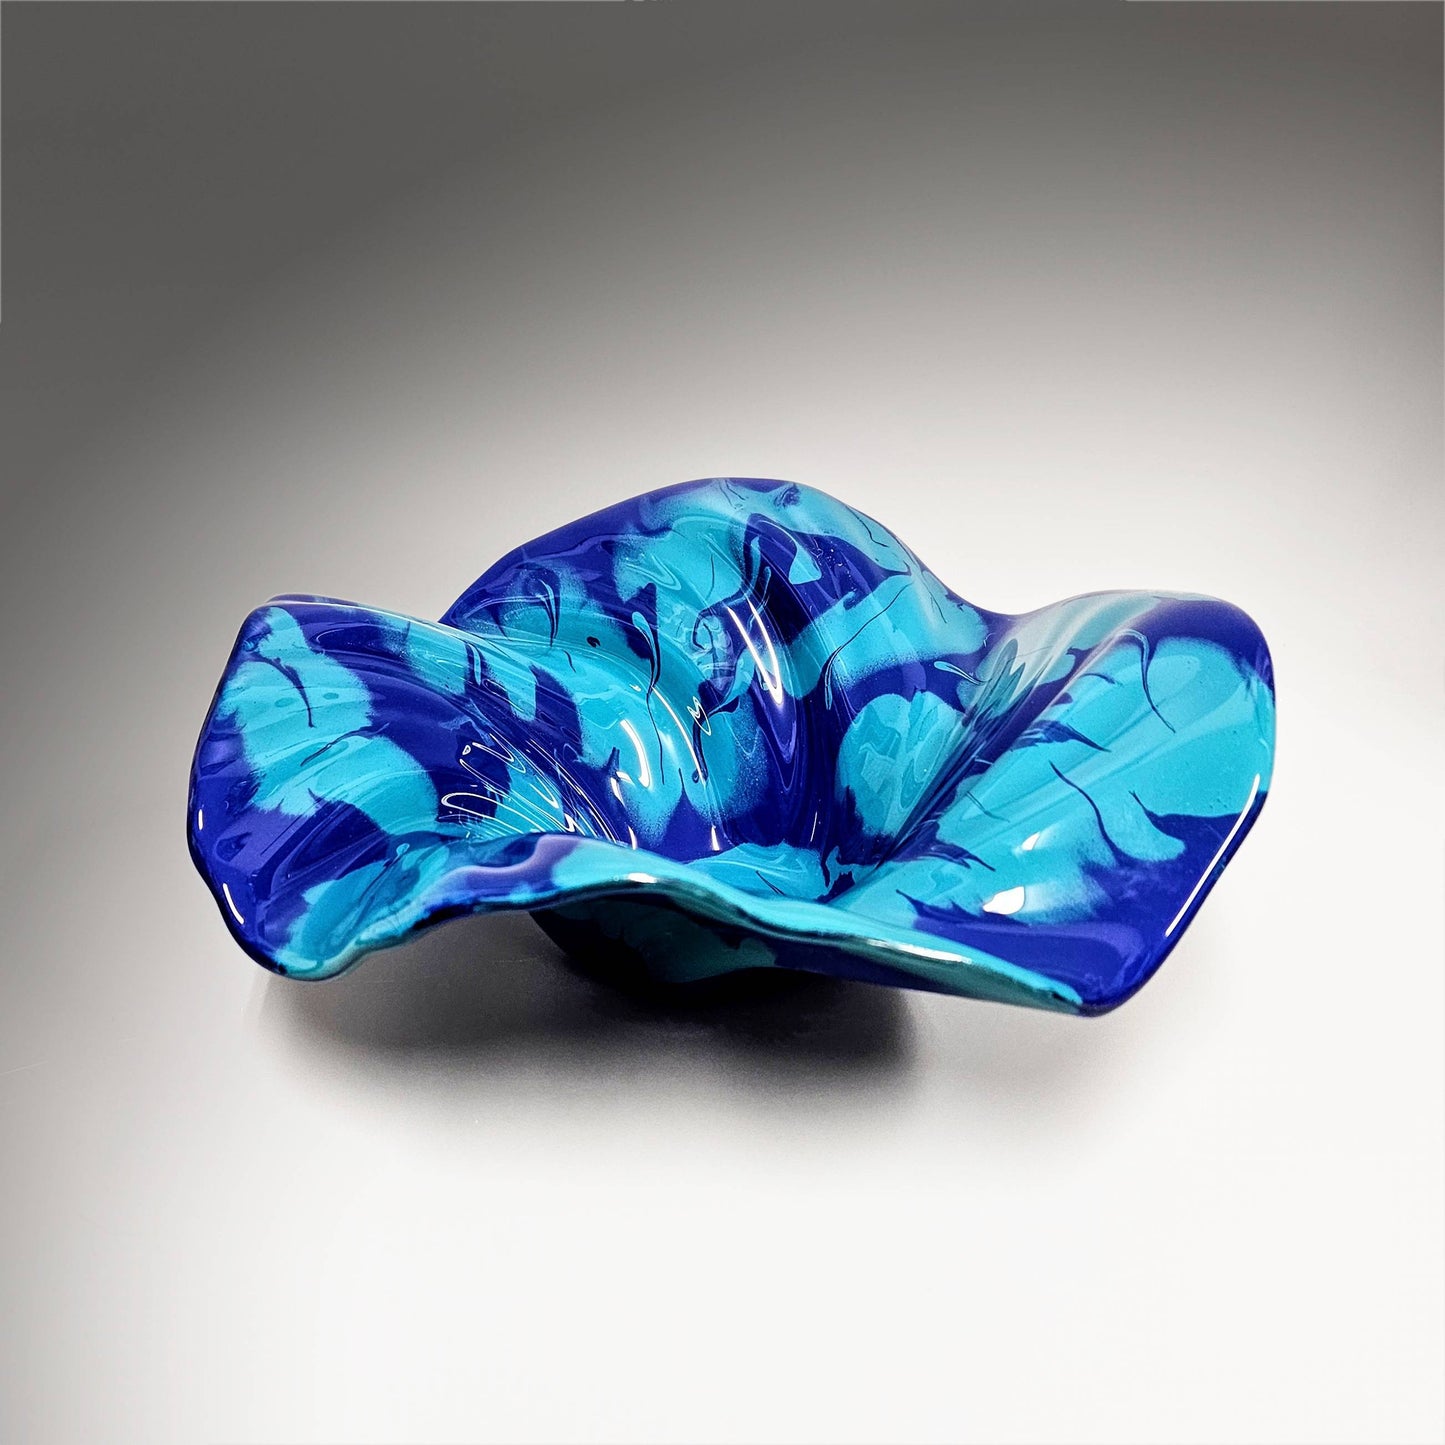 Glass Art Wave Bowl in Cobalt Blue Aqua Green